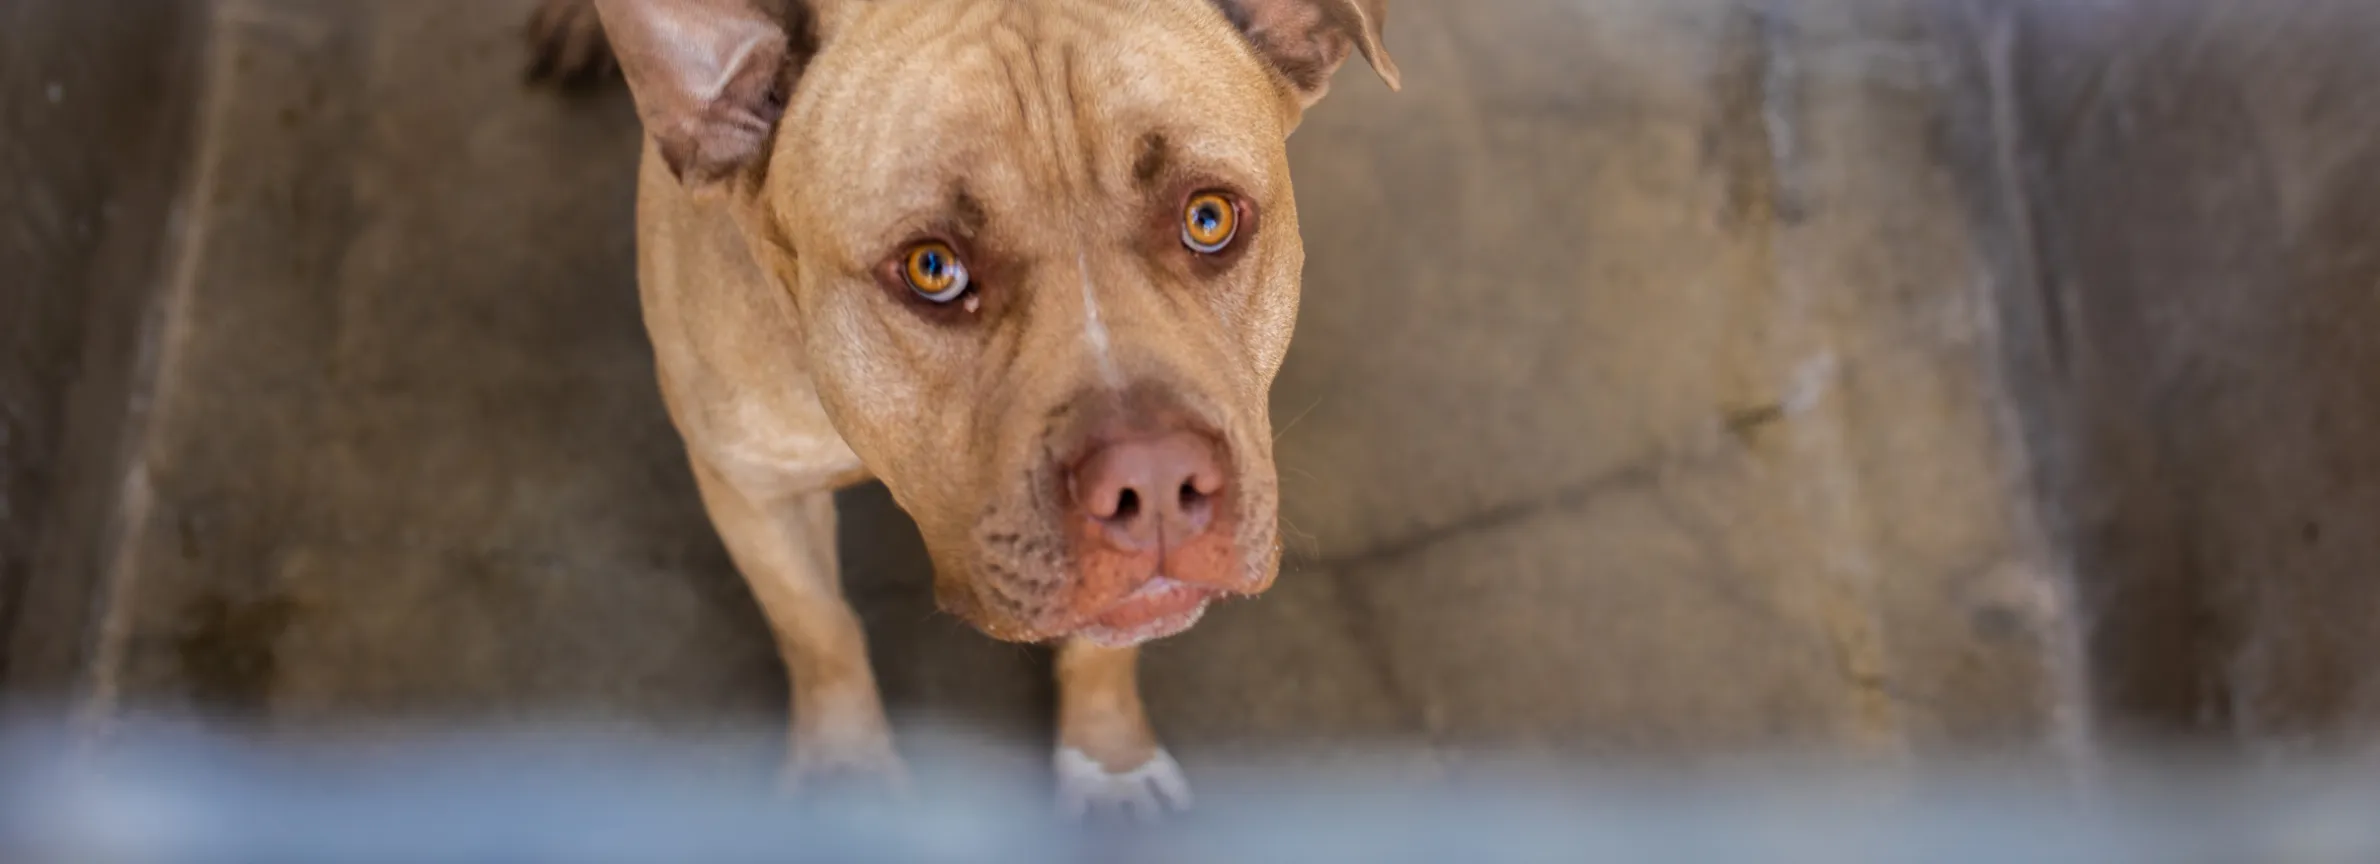 Animal Cruelty | LA Animal Services